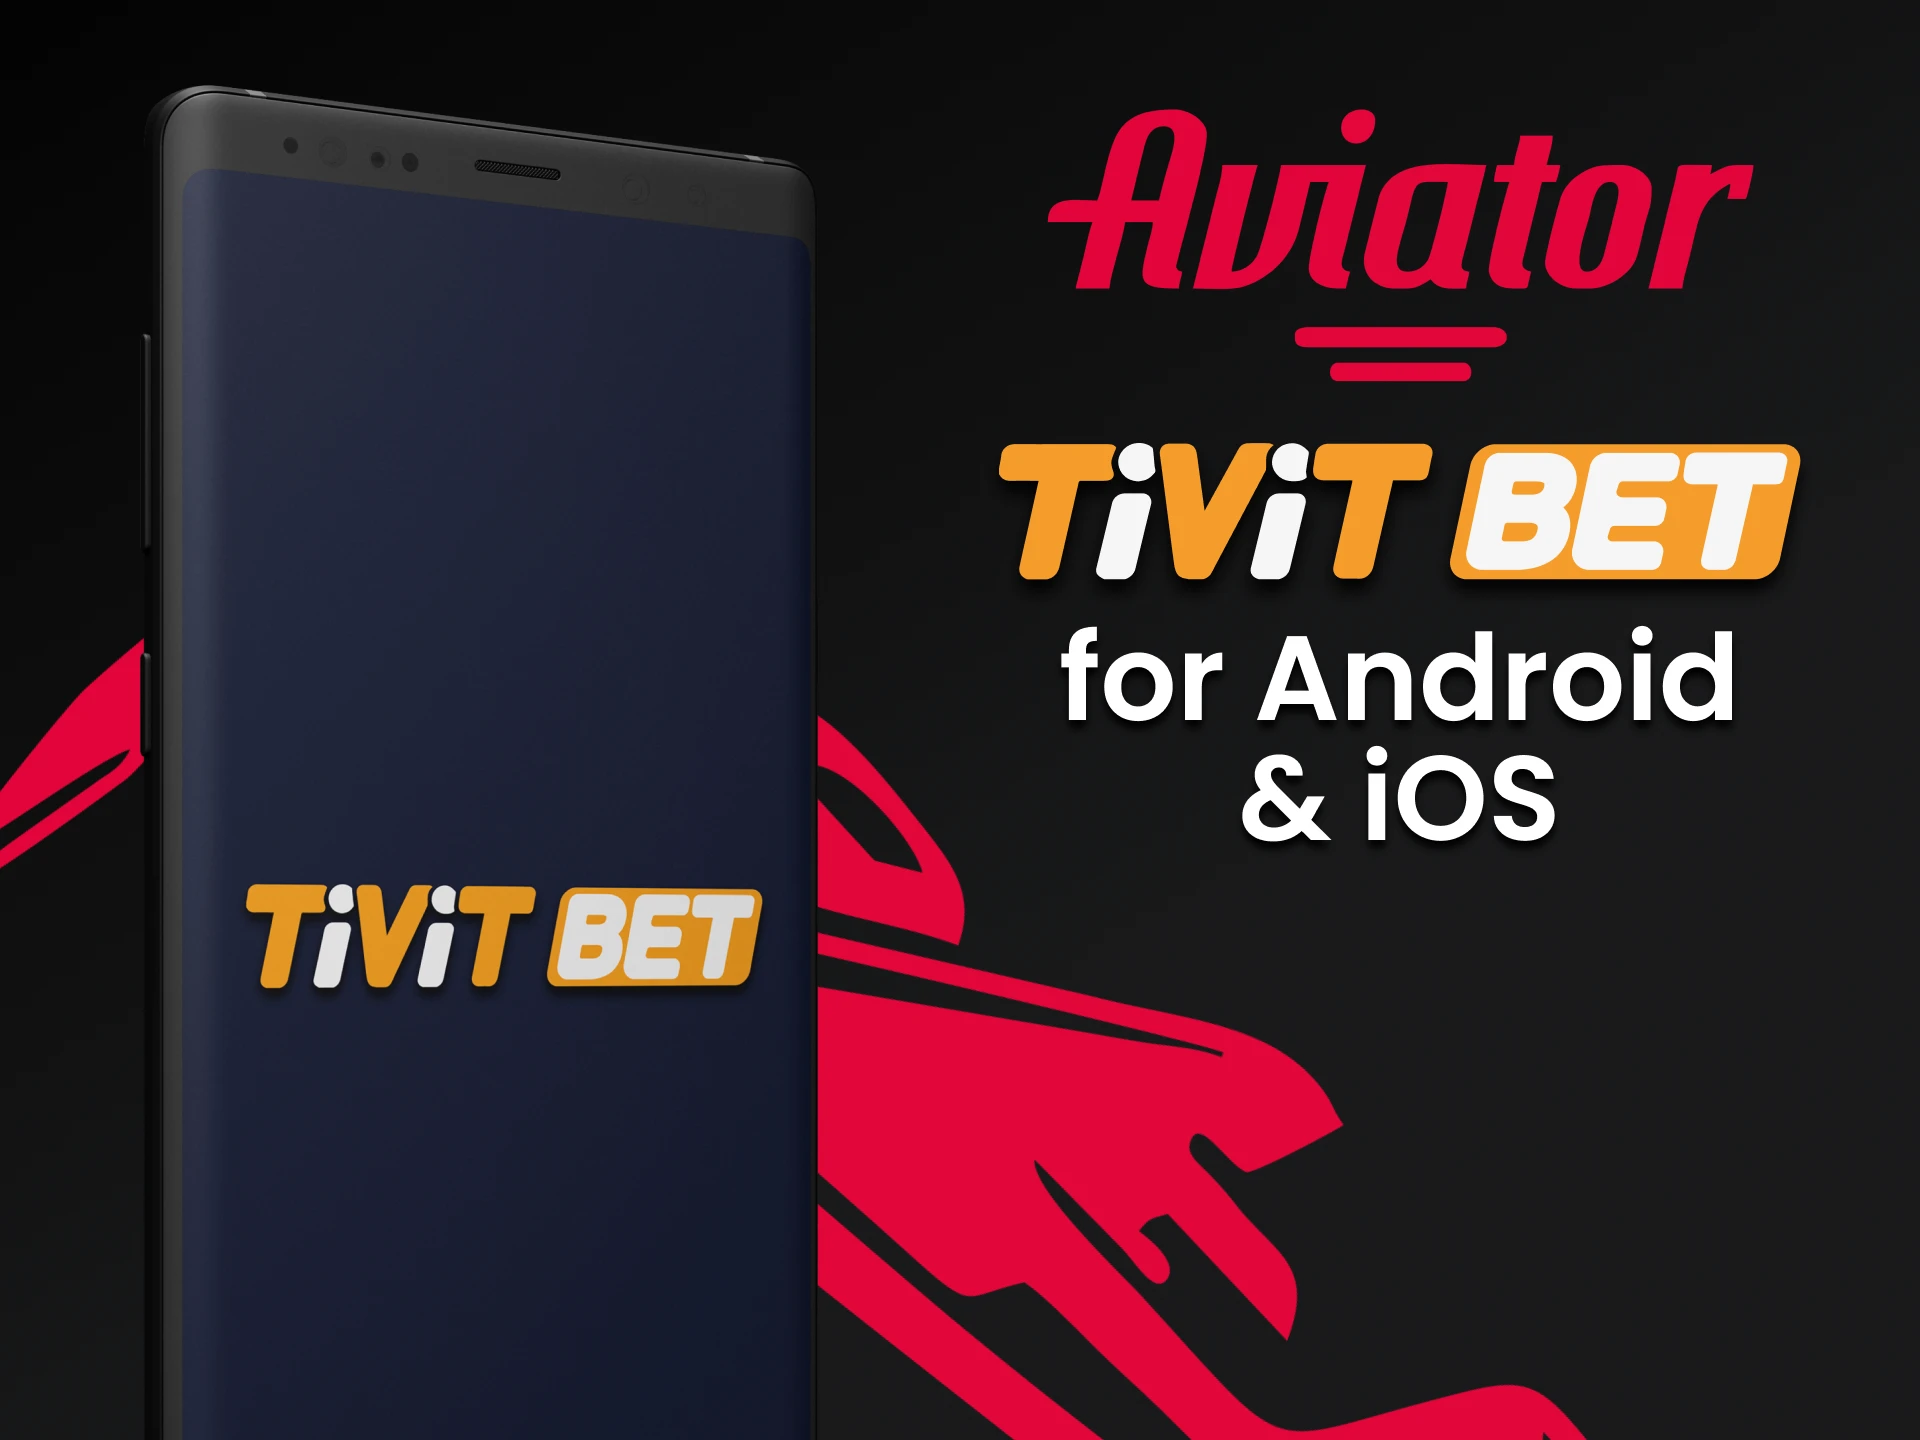 Use the Tivitbet app to play Aviator.